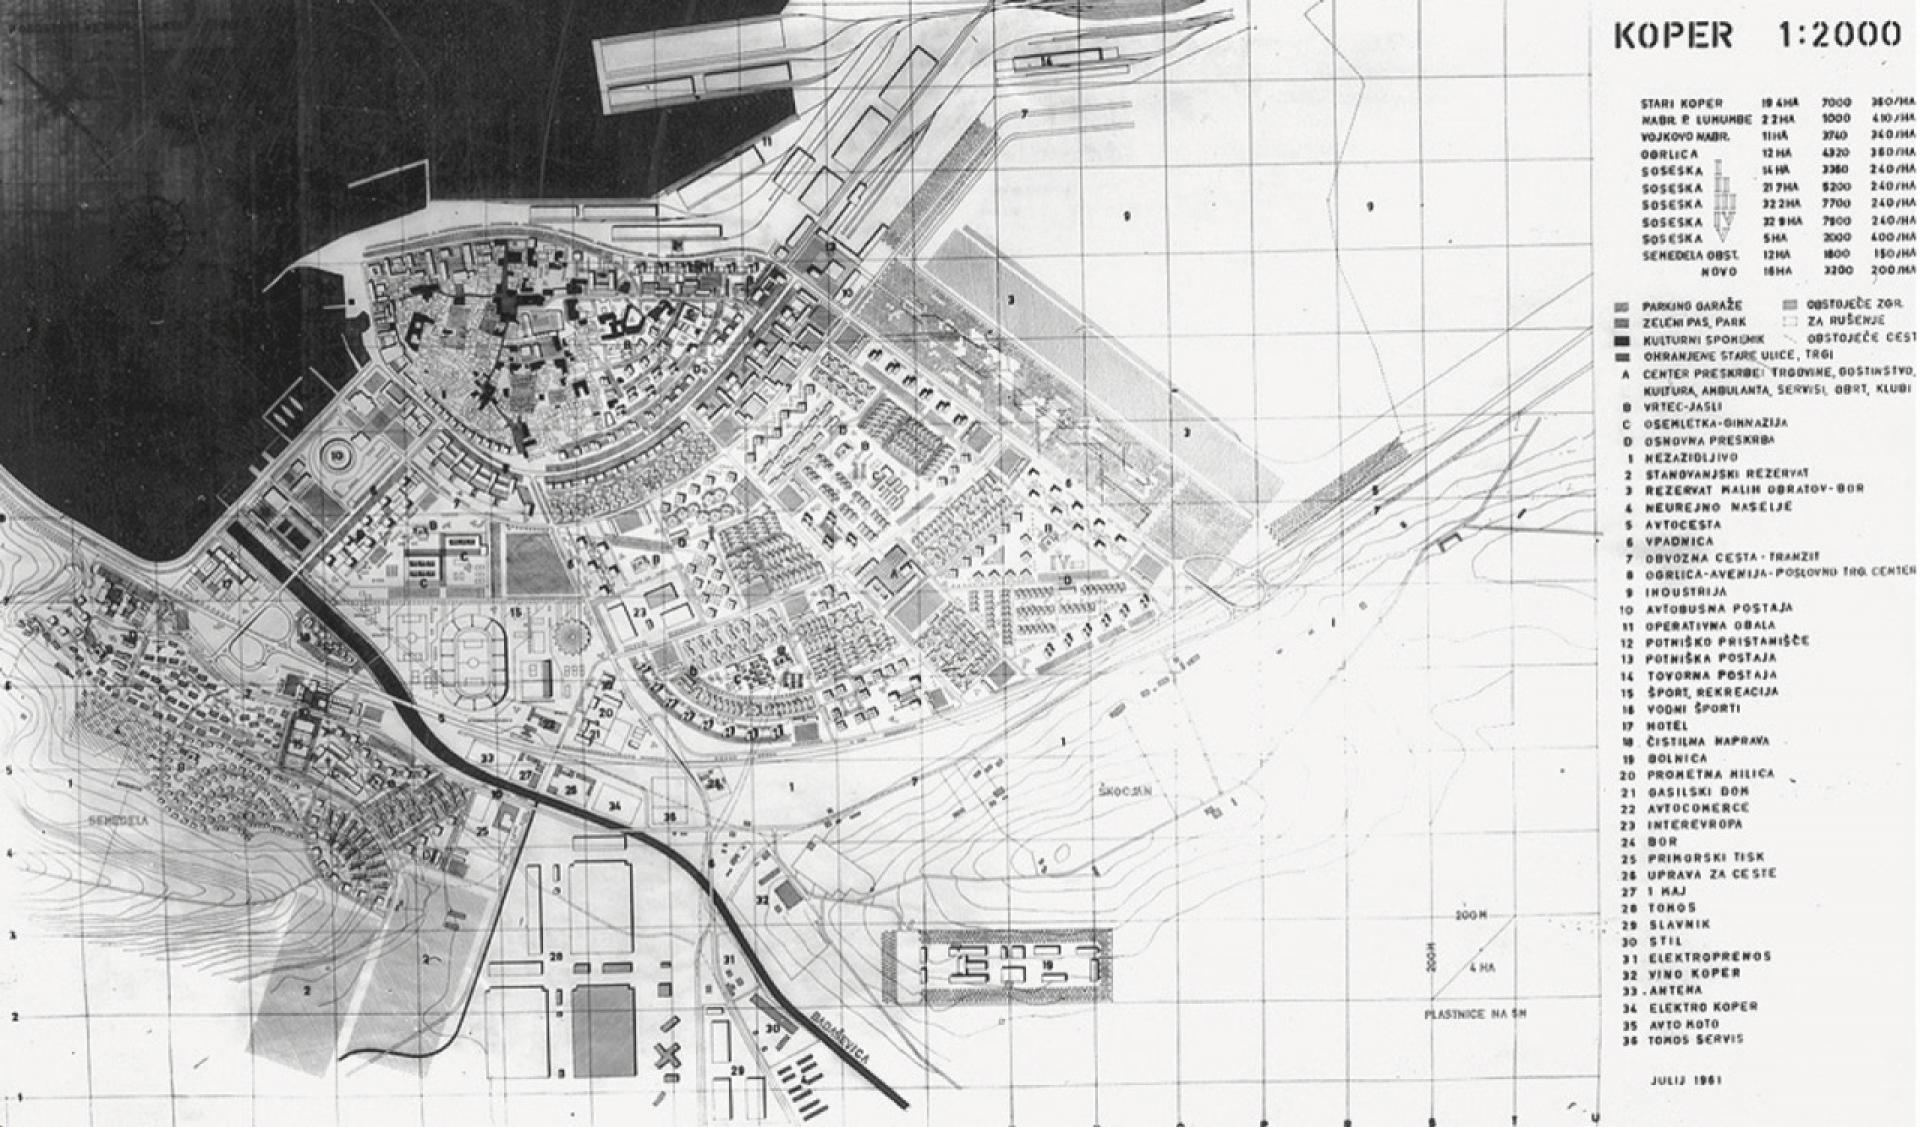 Mihevc’ study for the urban development project of Koper in 1961. | Source N. Čebron Lipovec (2012)